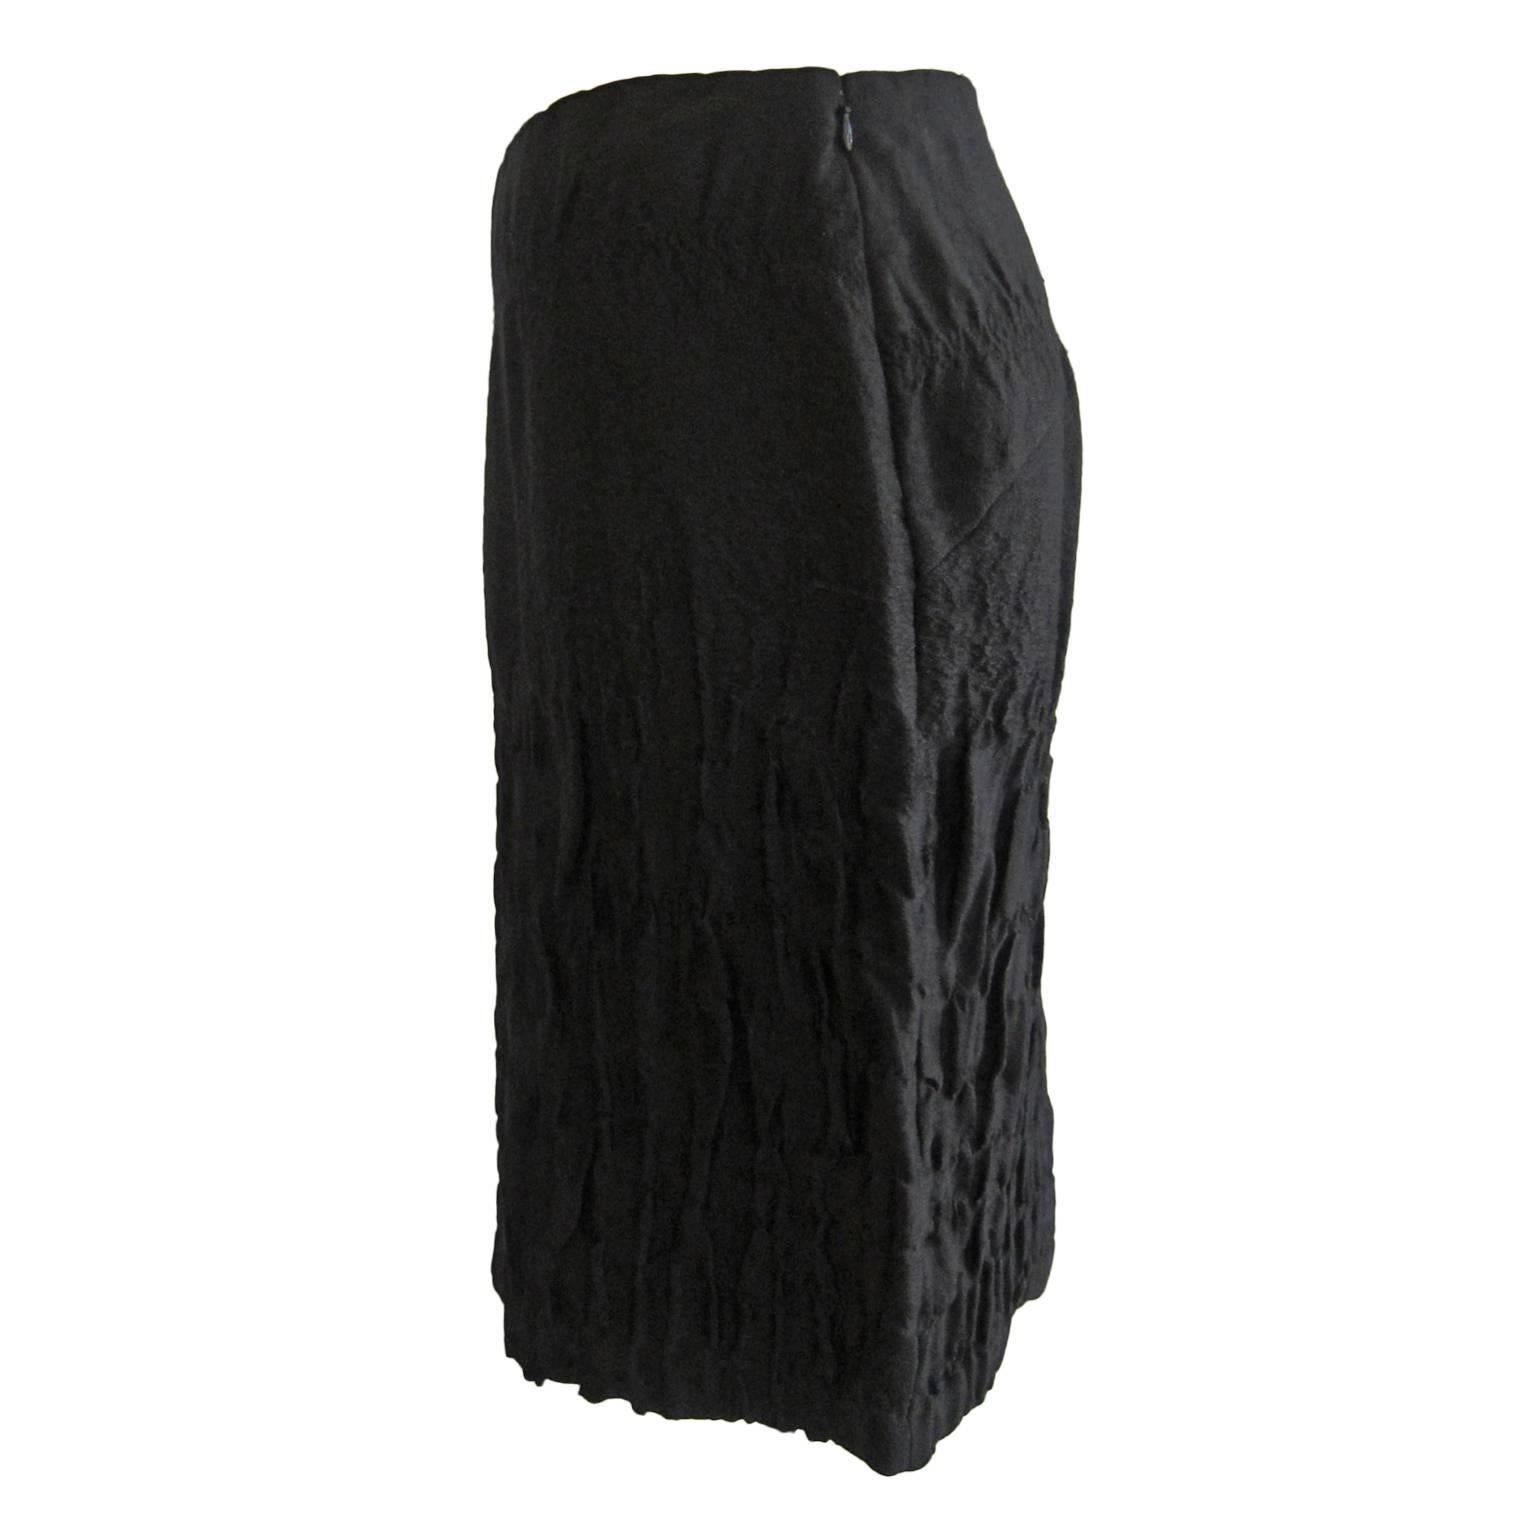 Elegant silk base black Prada pencil skirt is from collection AW 2007. Side blind zip closure.
Measurements : 
Original size : 40 IT 
waist : 76 cm
Length : 59 cm